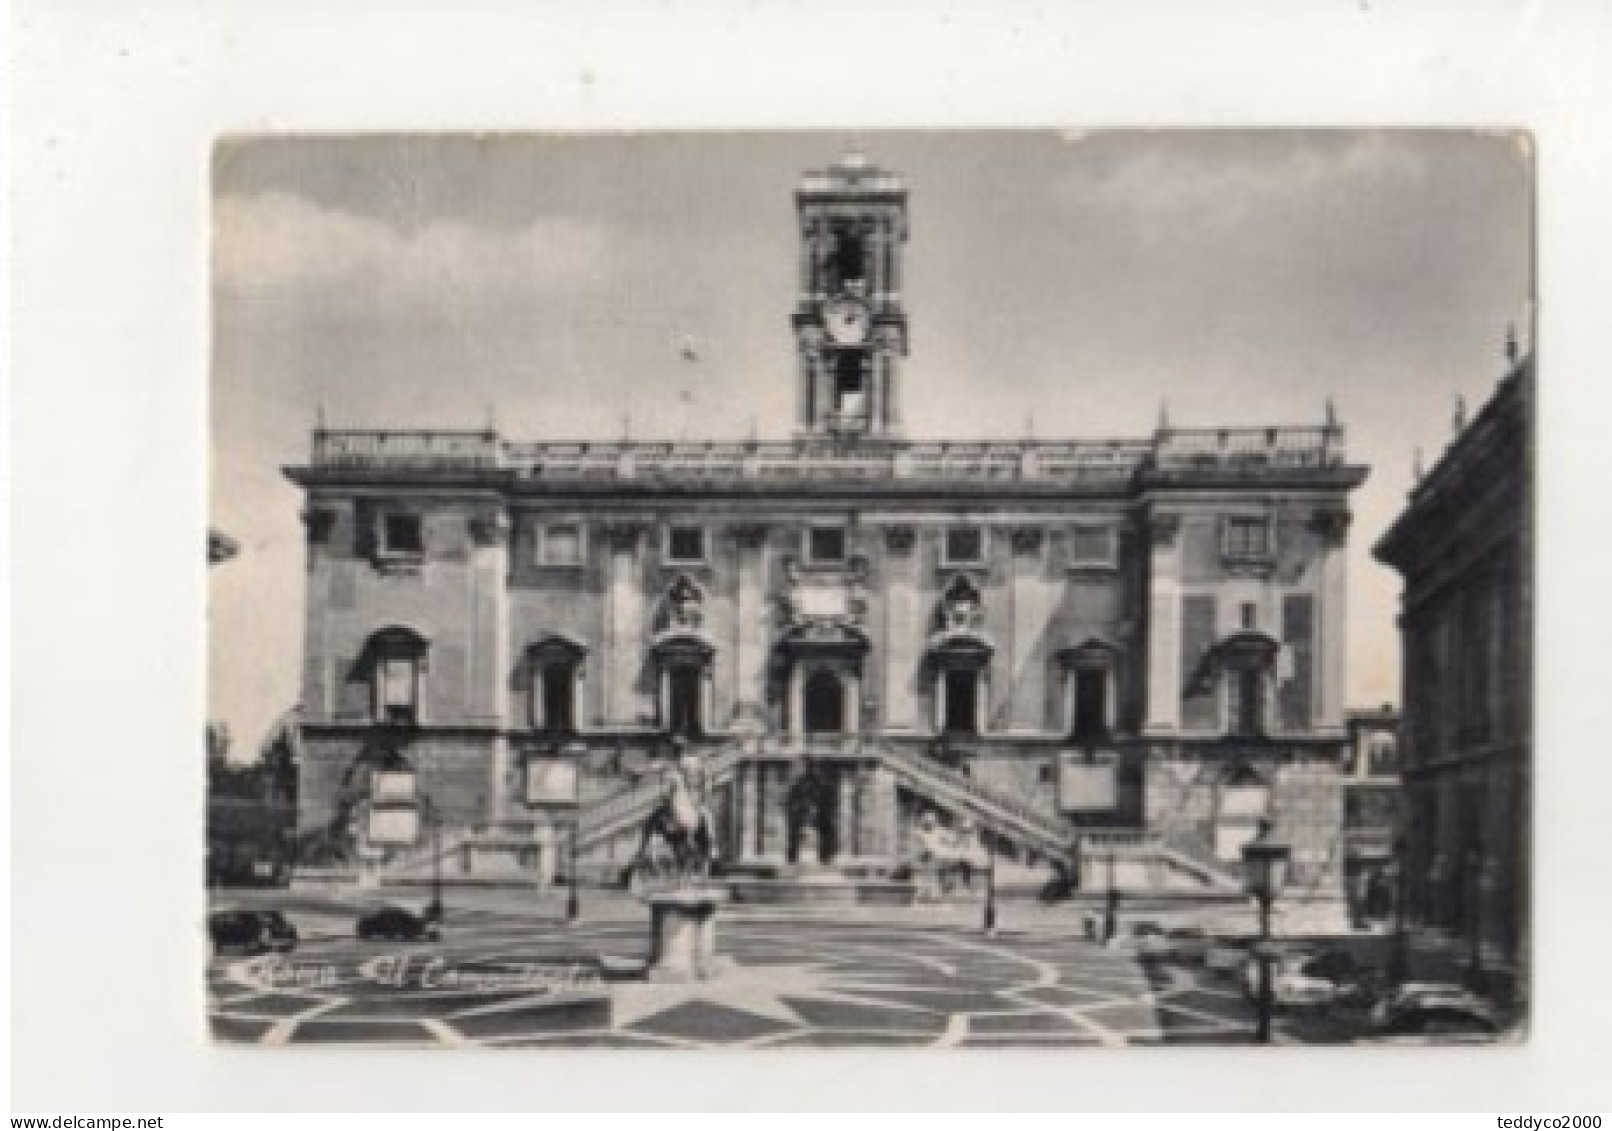 ROMA CAMPIDOGLIO 1964 - Andere Monumente & Gebäude